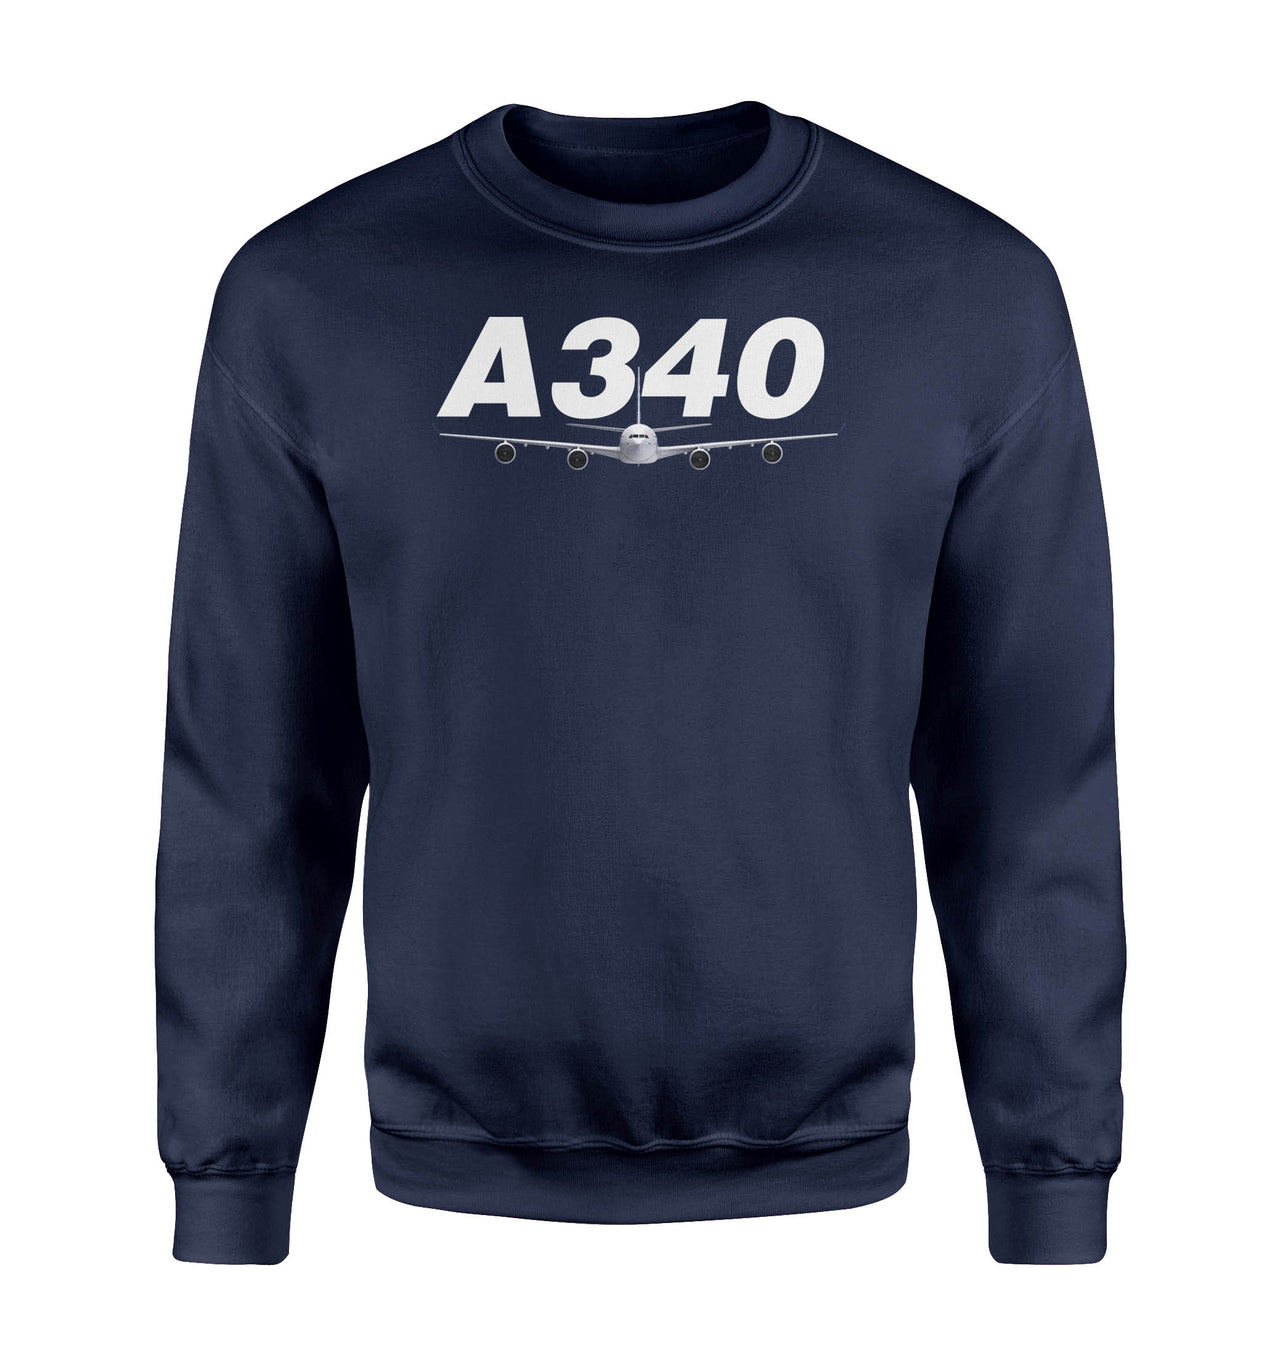 Super Airbus A340 Designed Sweatshirts